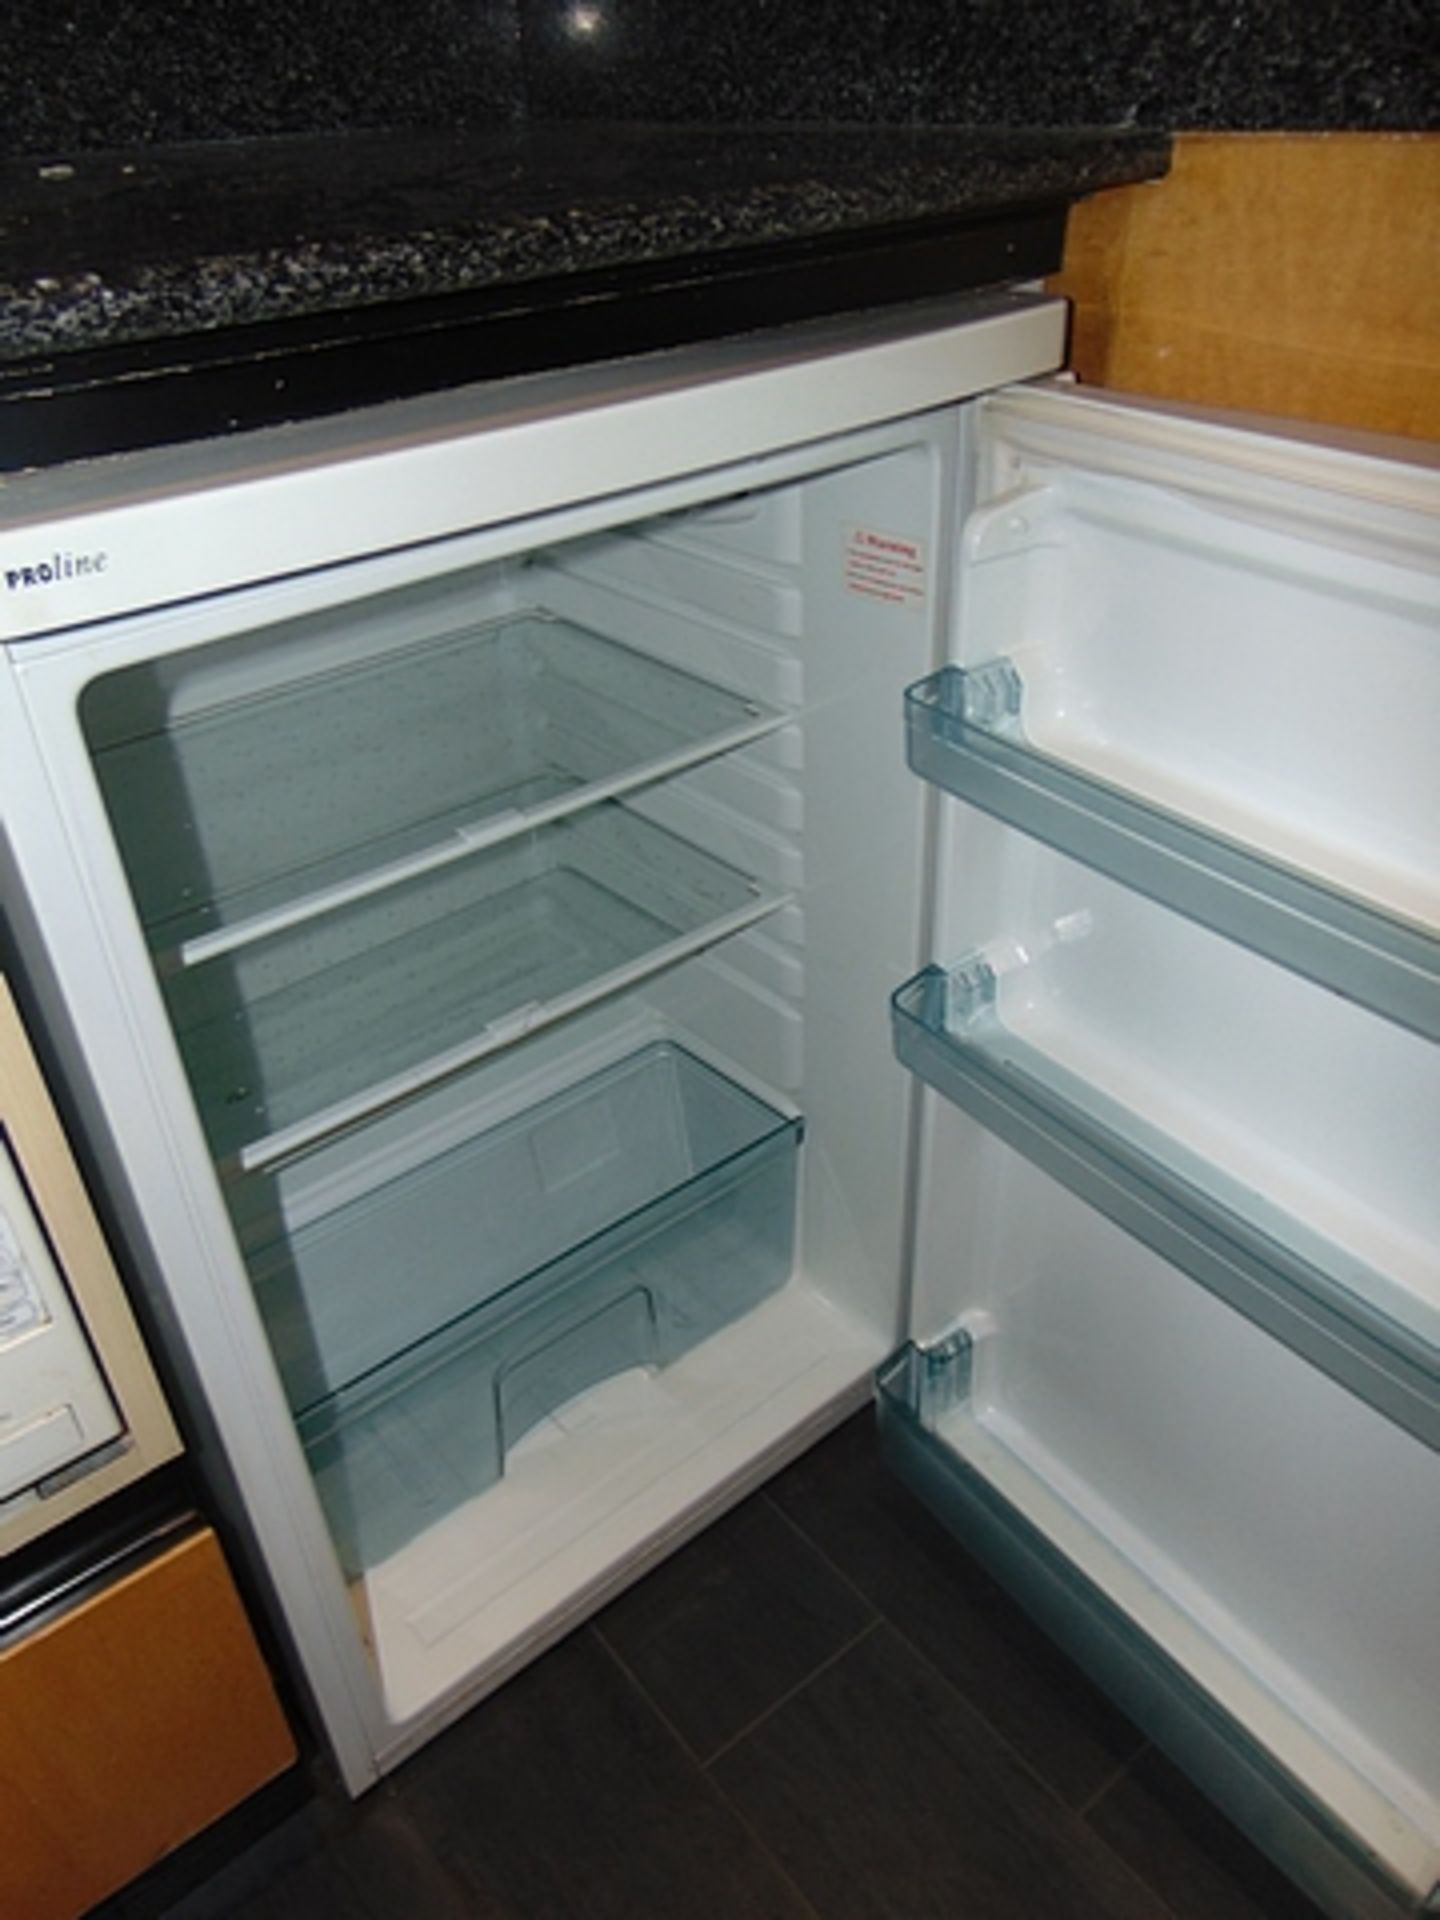 Proline undercounter refrigerator